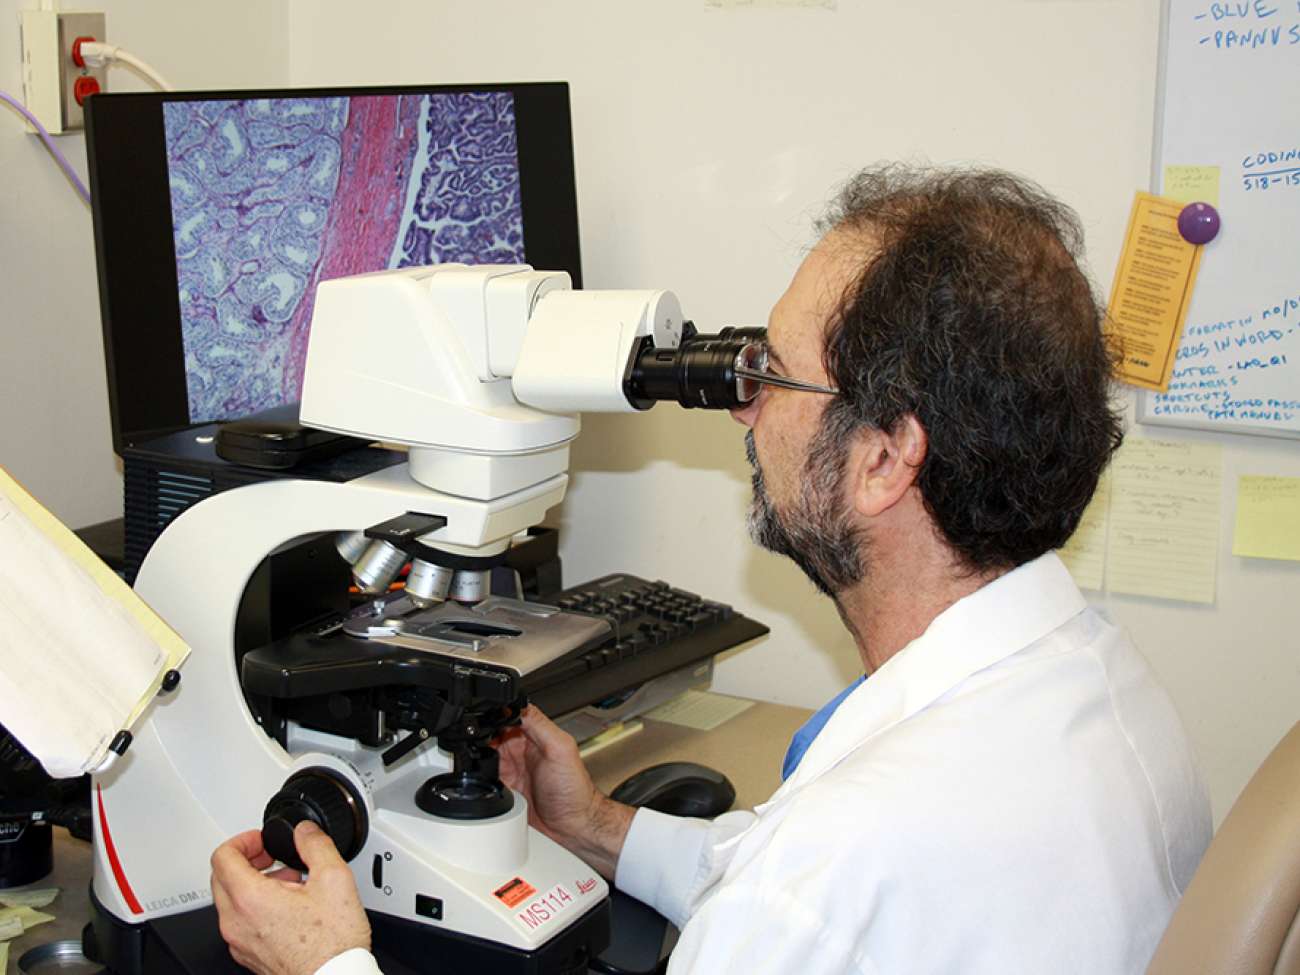 Dr Adrian Batten examines pathology slides under a microscope